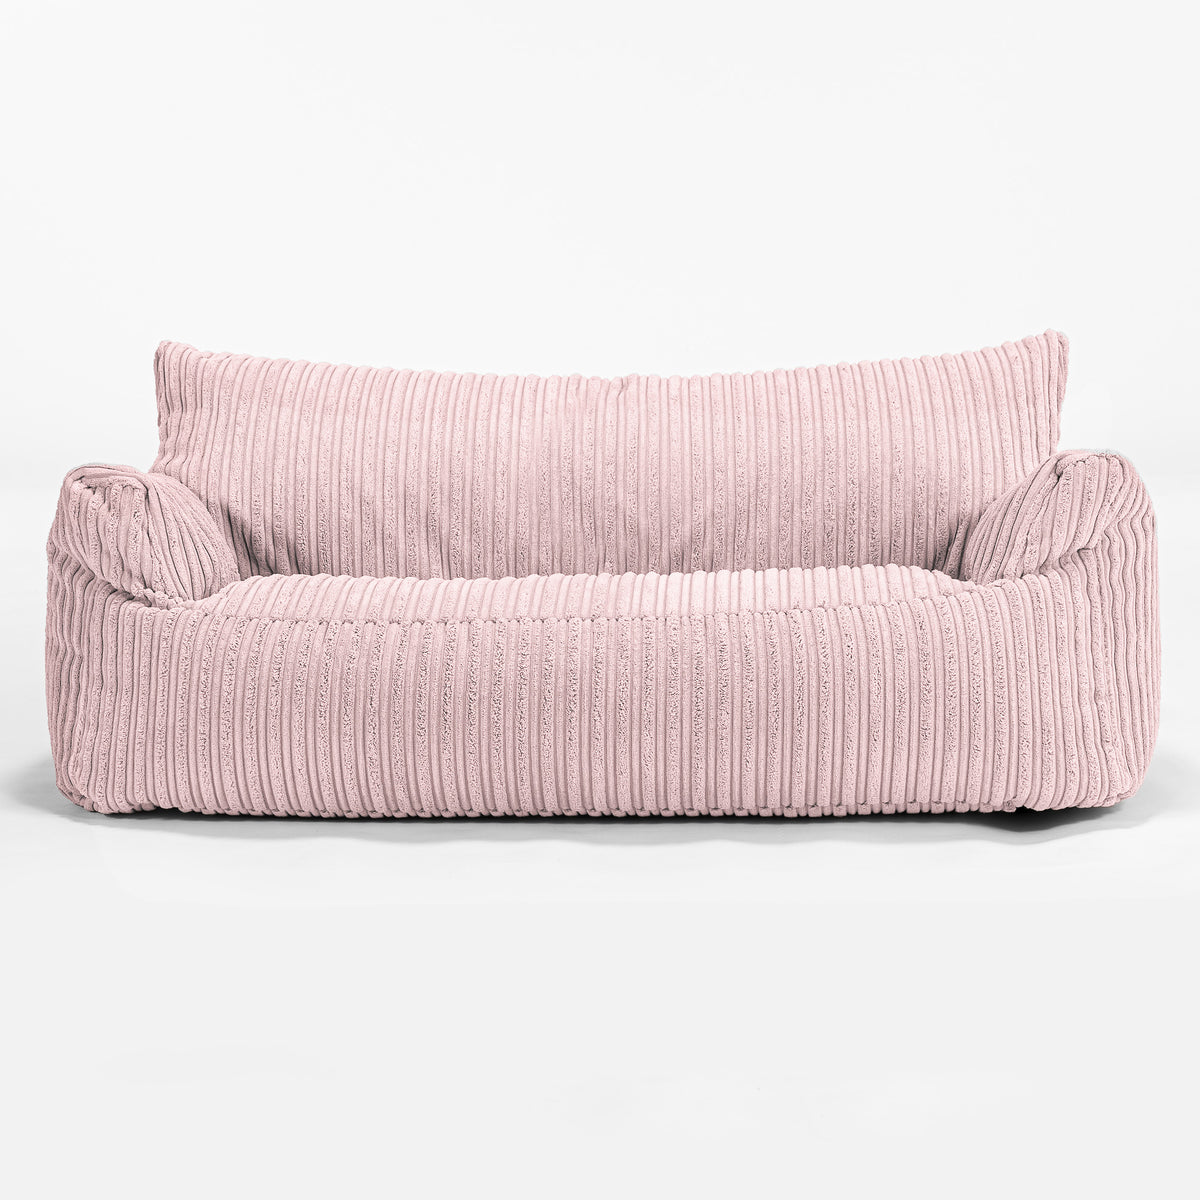 Josephine Children's Sofa Bean Bag 1-5 yr - Cord Blush Pink